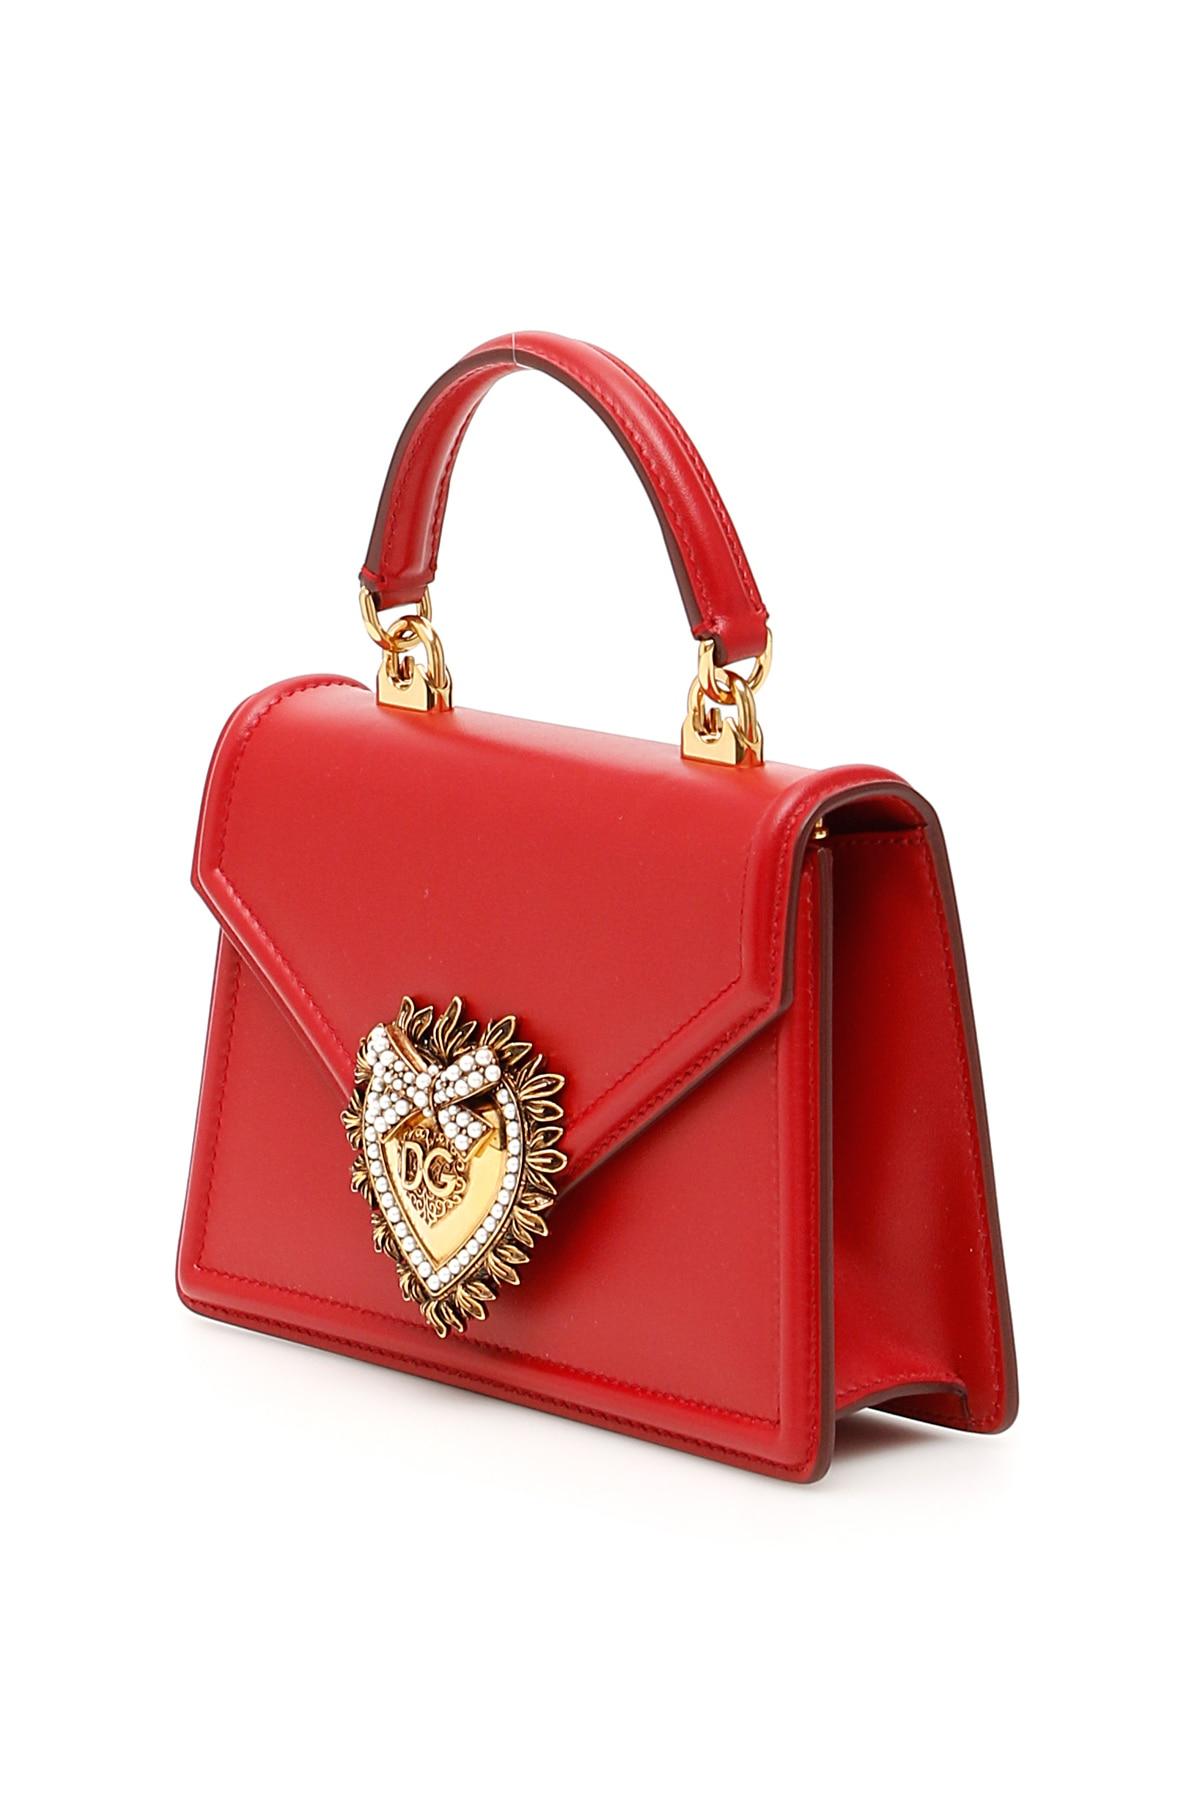 Dolce & Gabbana Devotion Bag